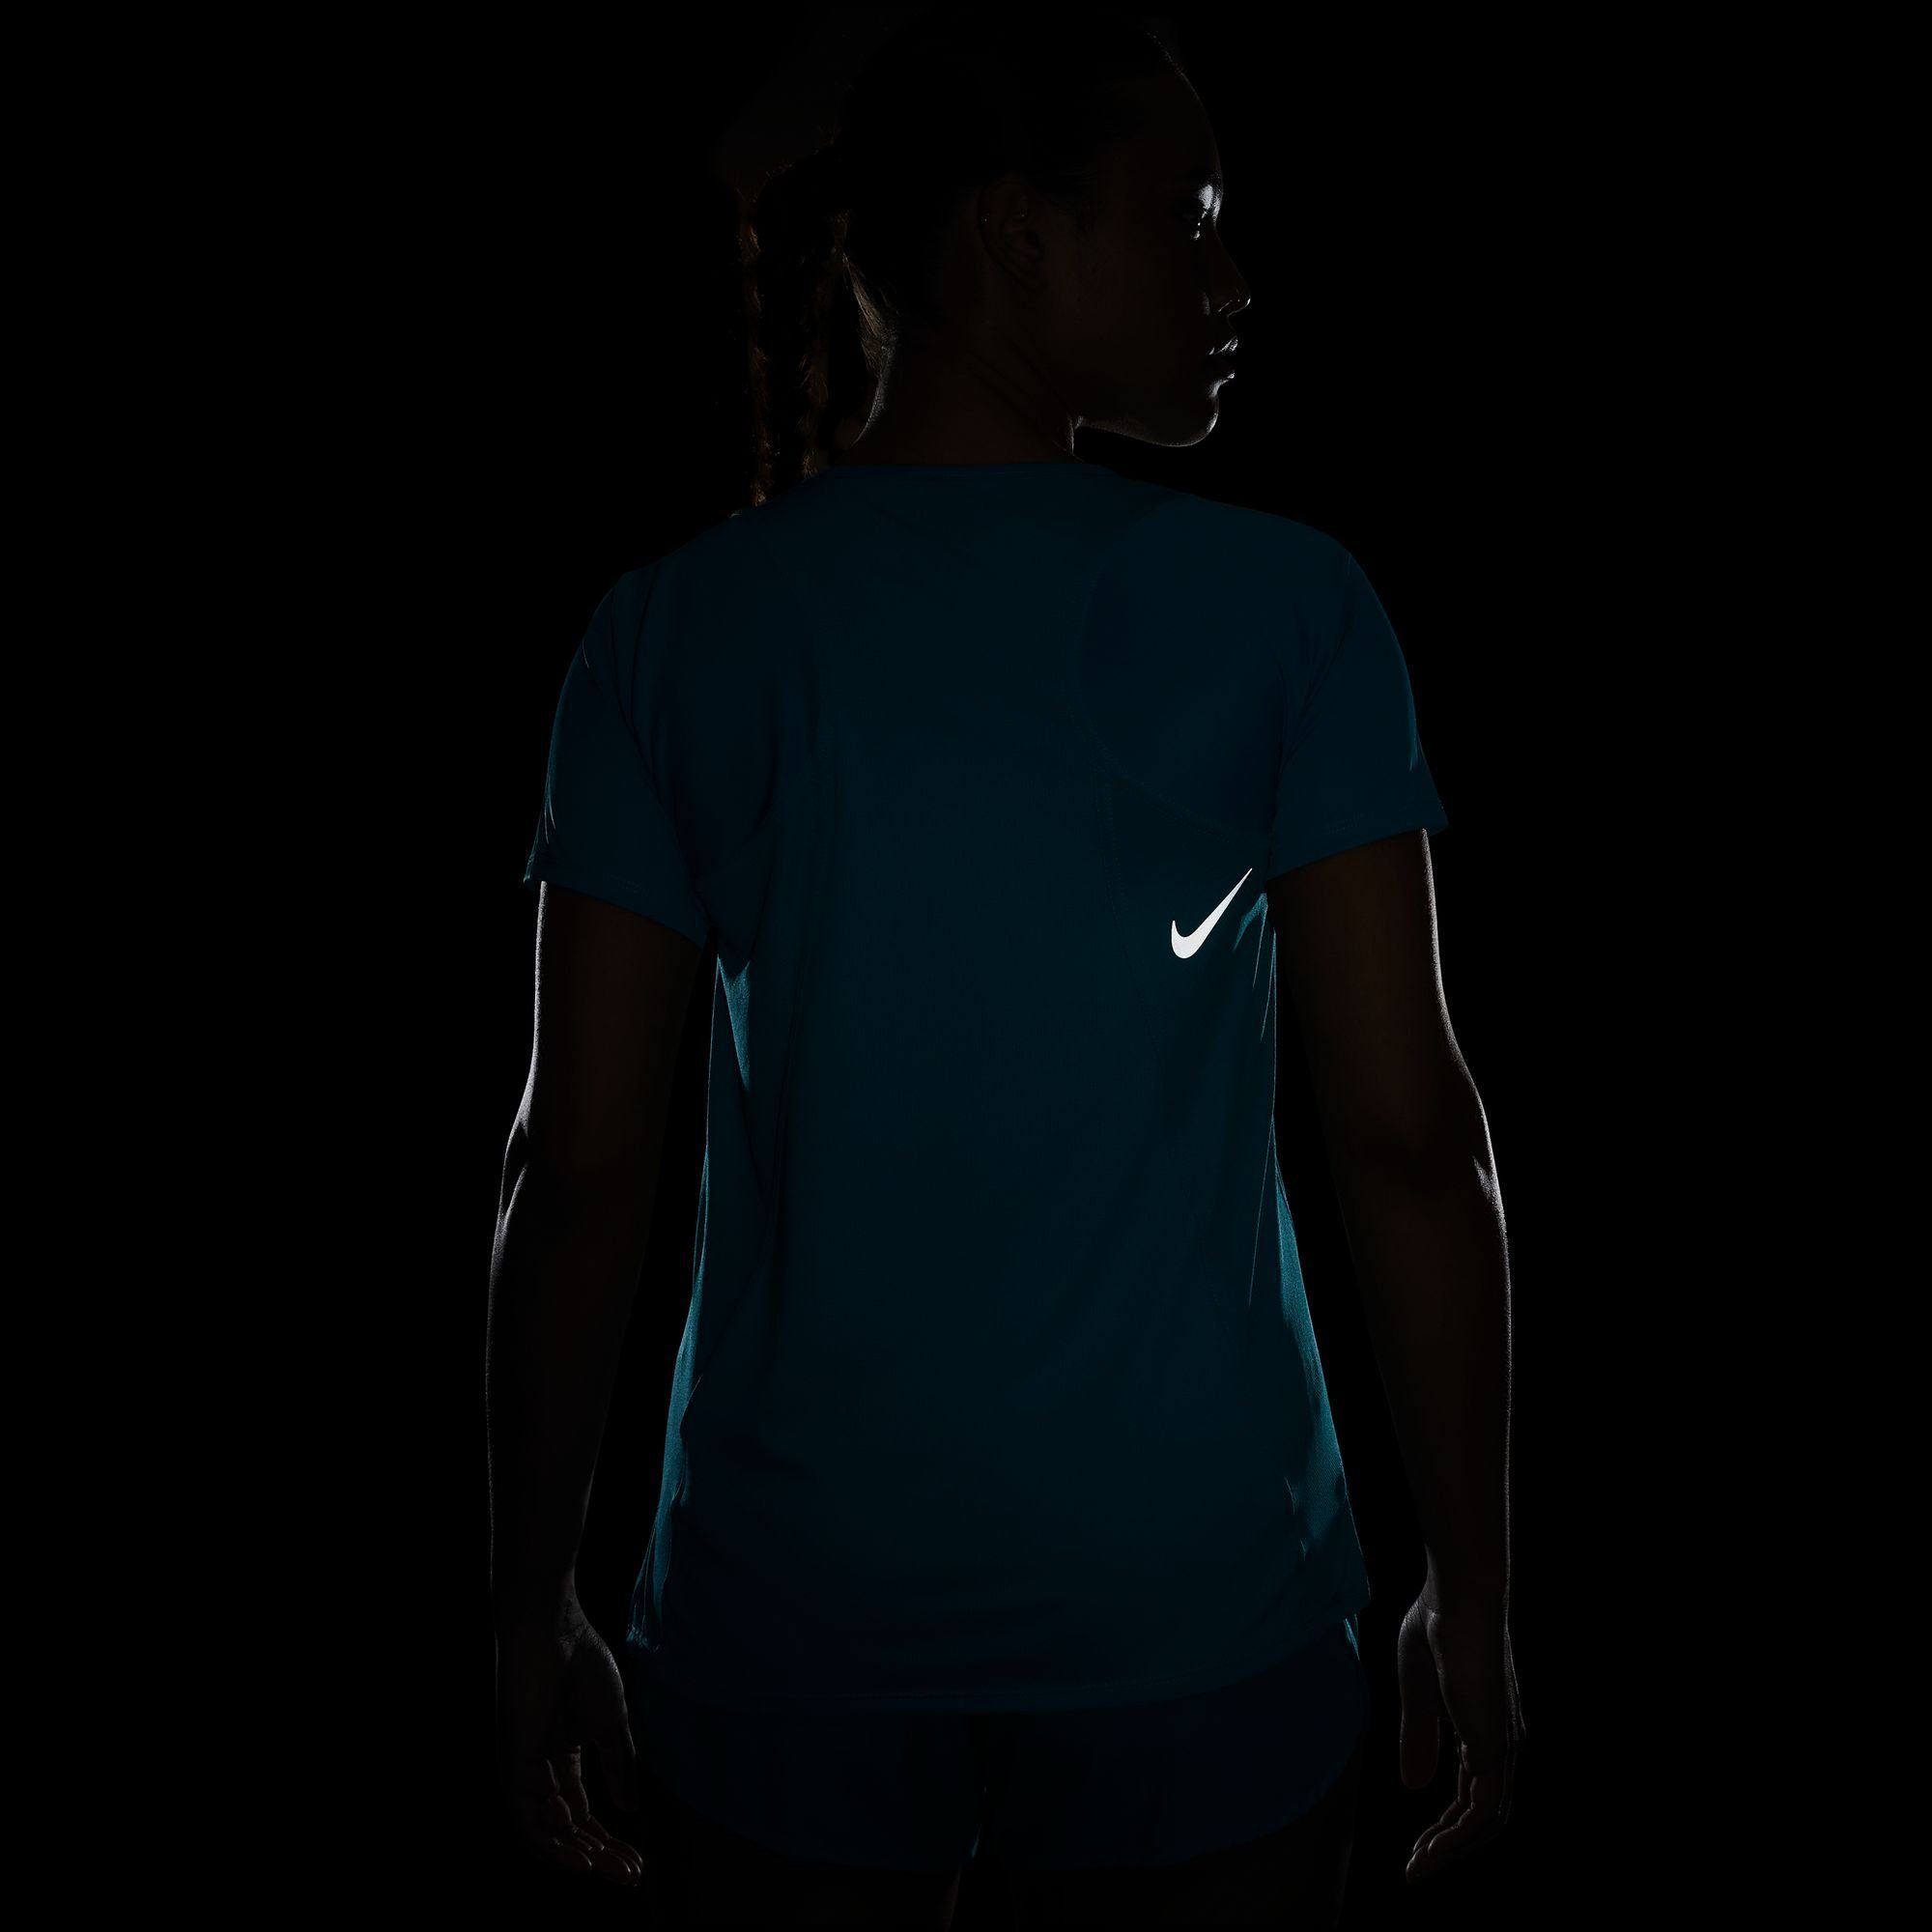 TOP TEAL/REFLECTIVE Nike RUNNING RAPID SHORT-SLEEVE DRI-FIT SILV RACE Laufshirt WOMEN'S